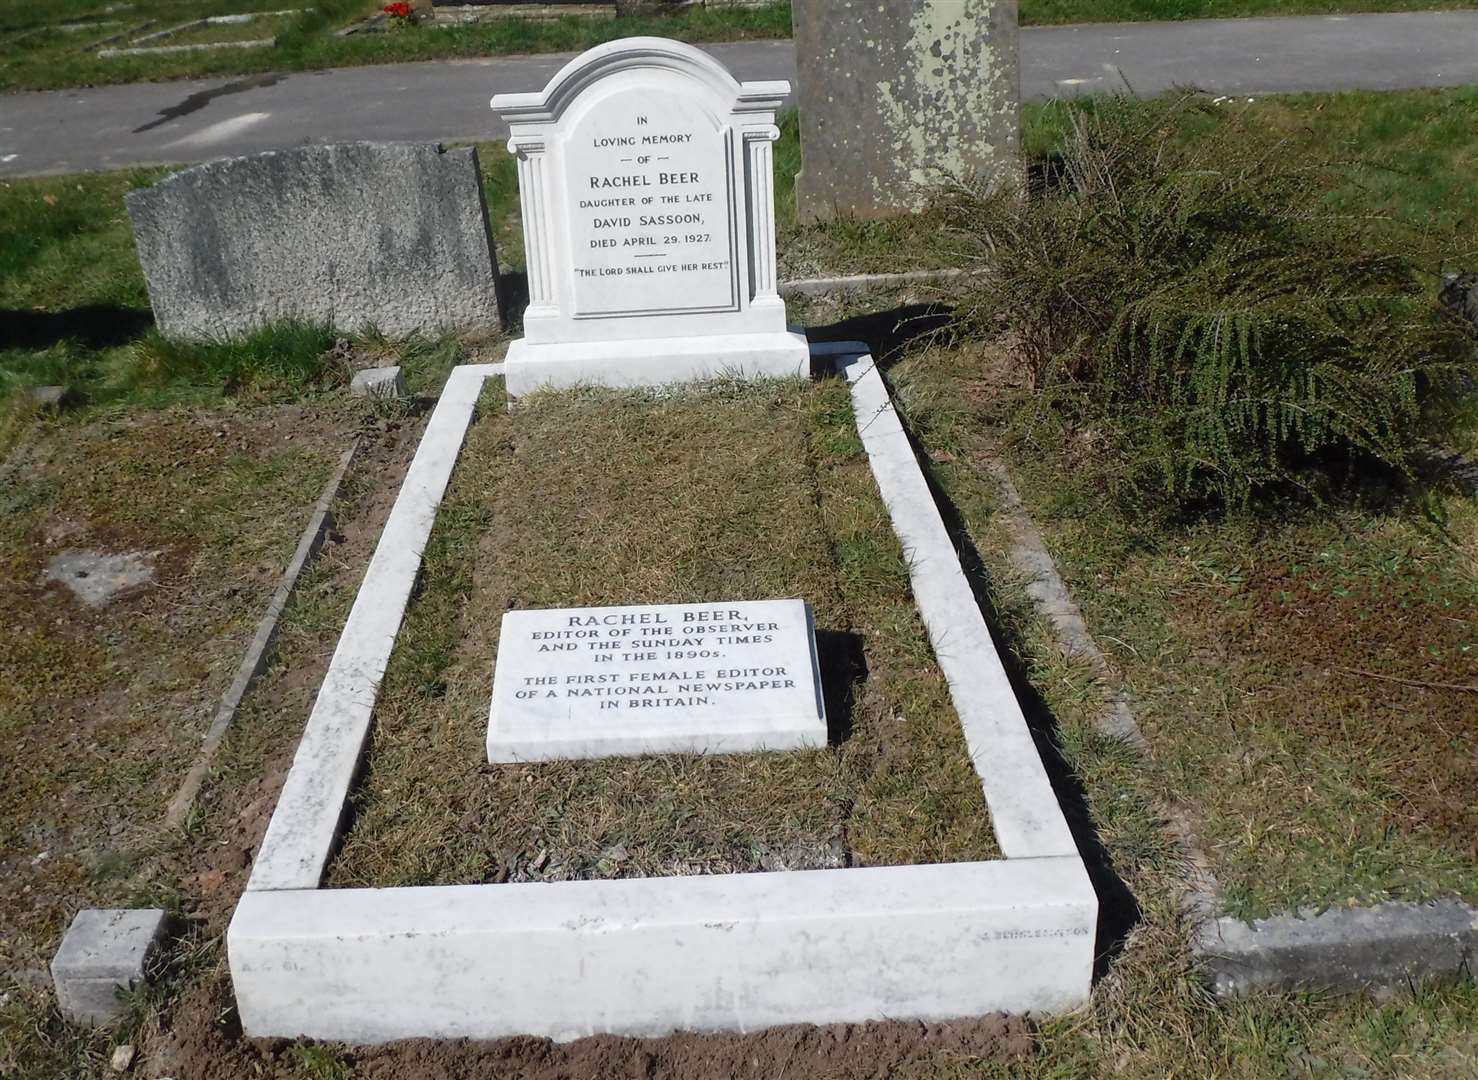 The restored grave and a new plaque, commemorating Rachel Beer's achievements, on her grave in Tunbridge Wells Picture: Ann Treneman